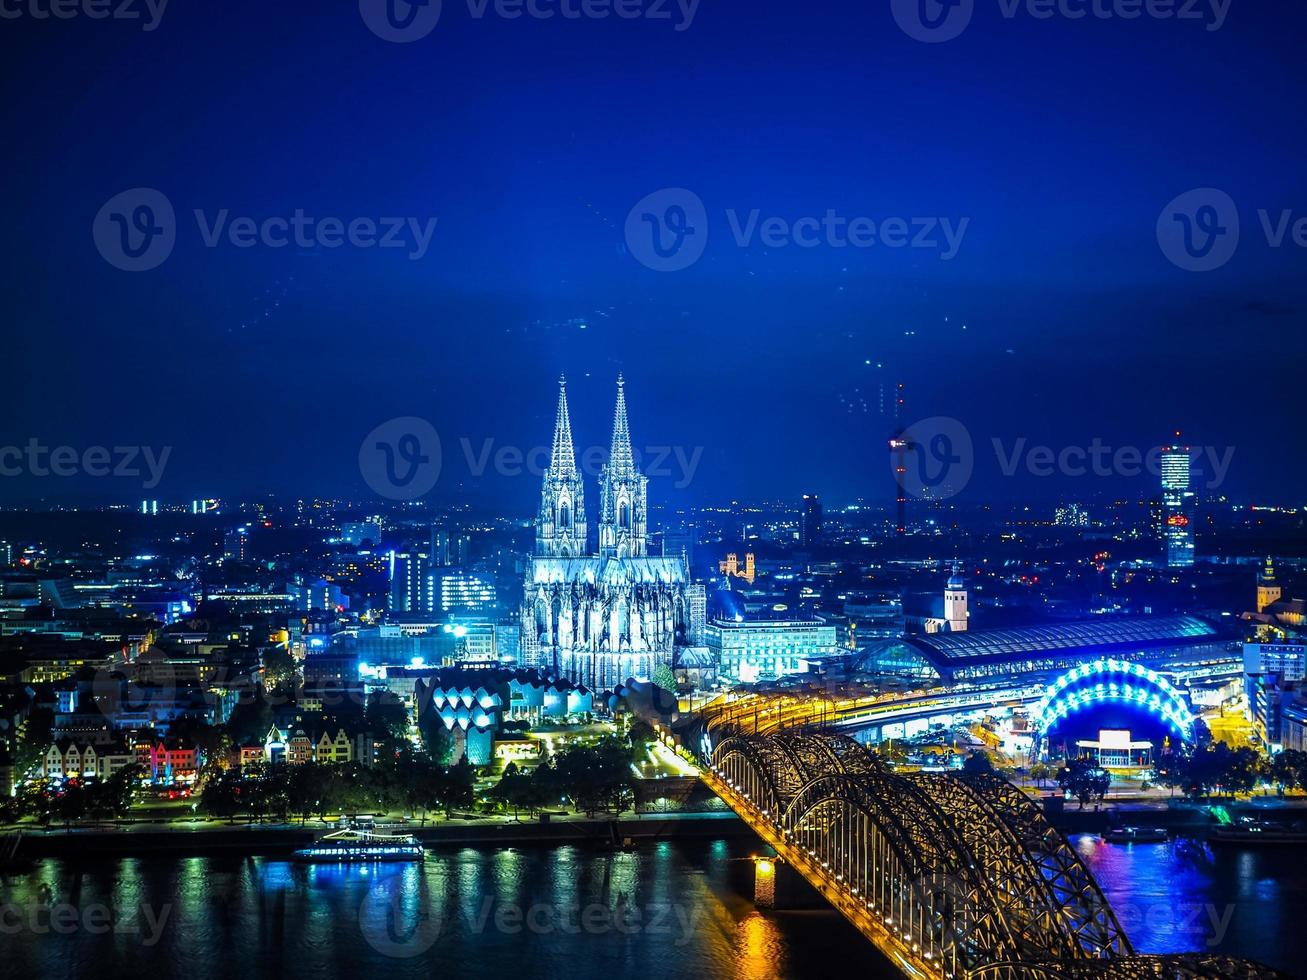 hdr luchtfoto nacht uitzicht op st peter kathedraal en hohenzollern bri foto